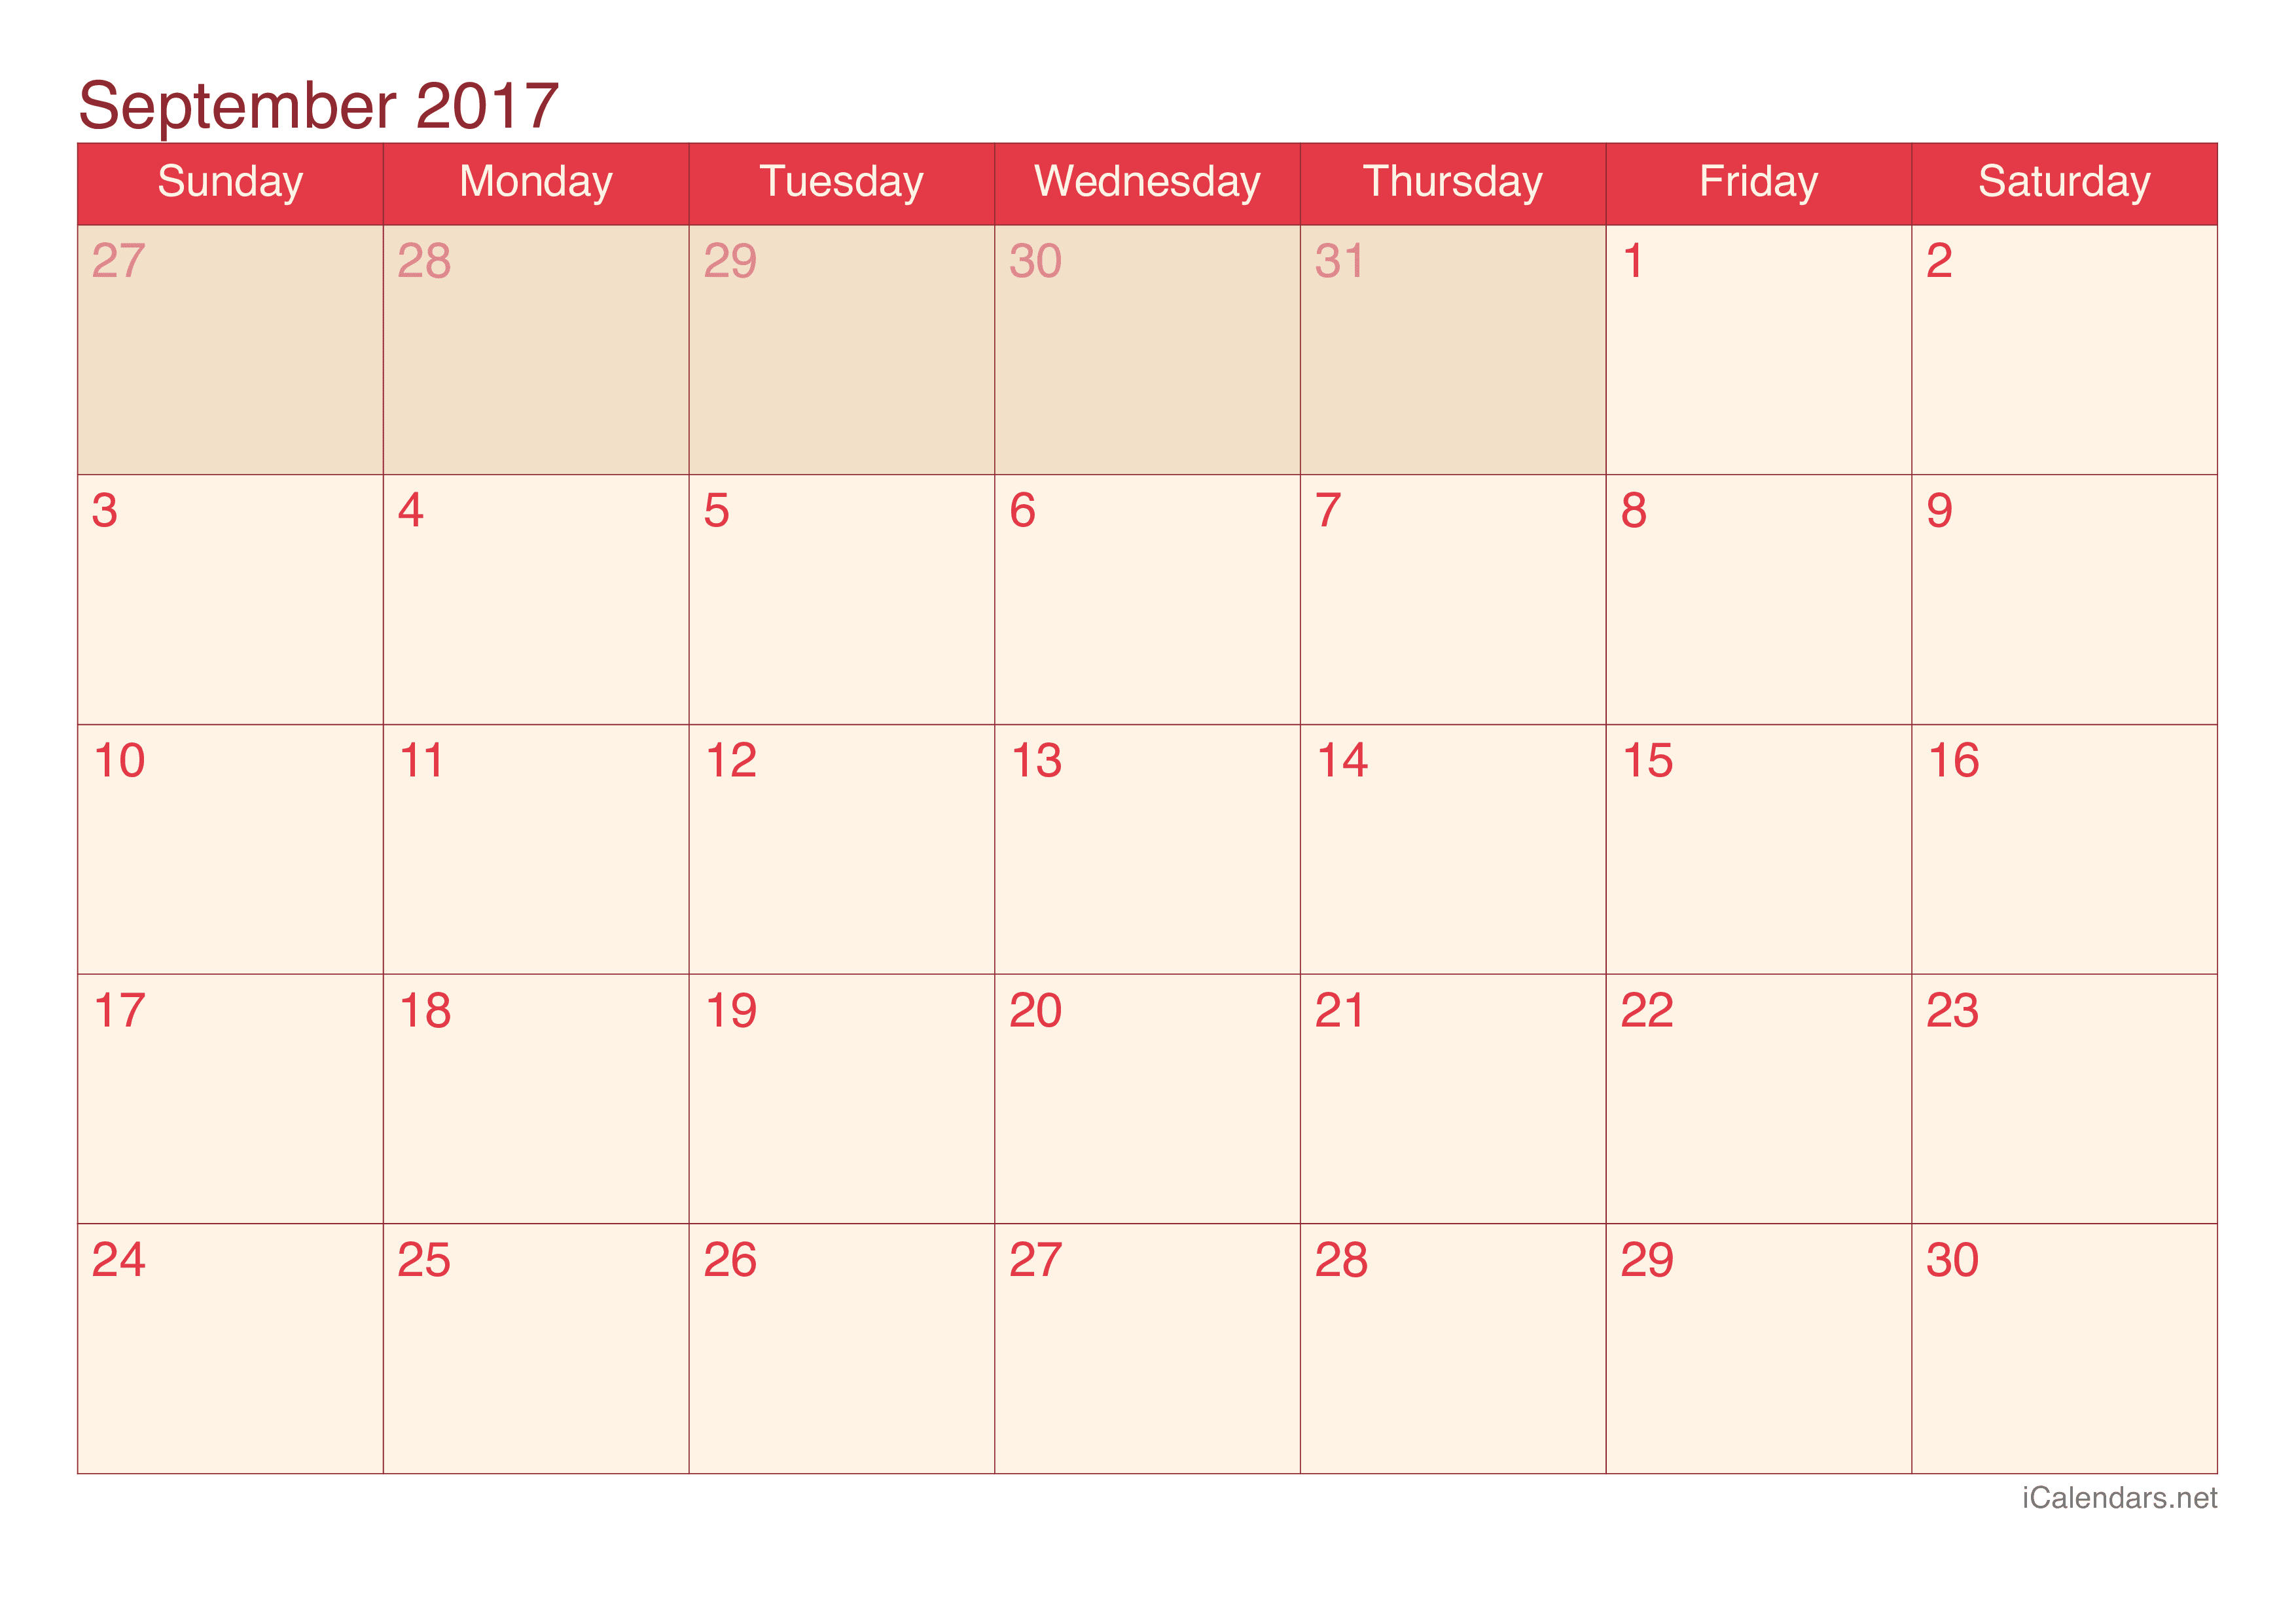 2017 September Calendar - Cherry